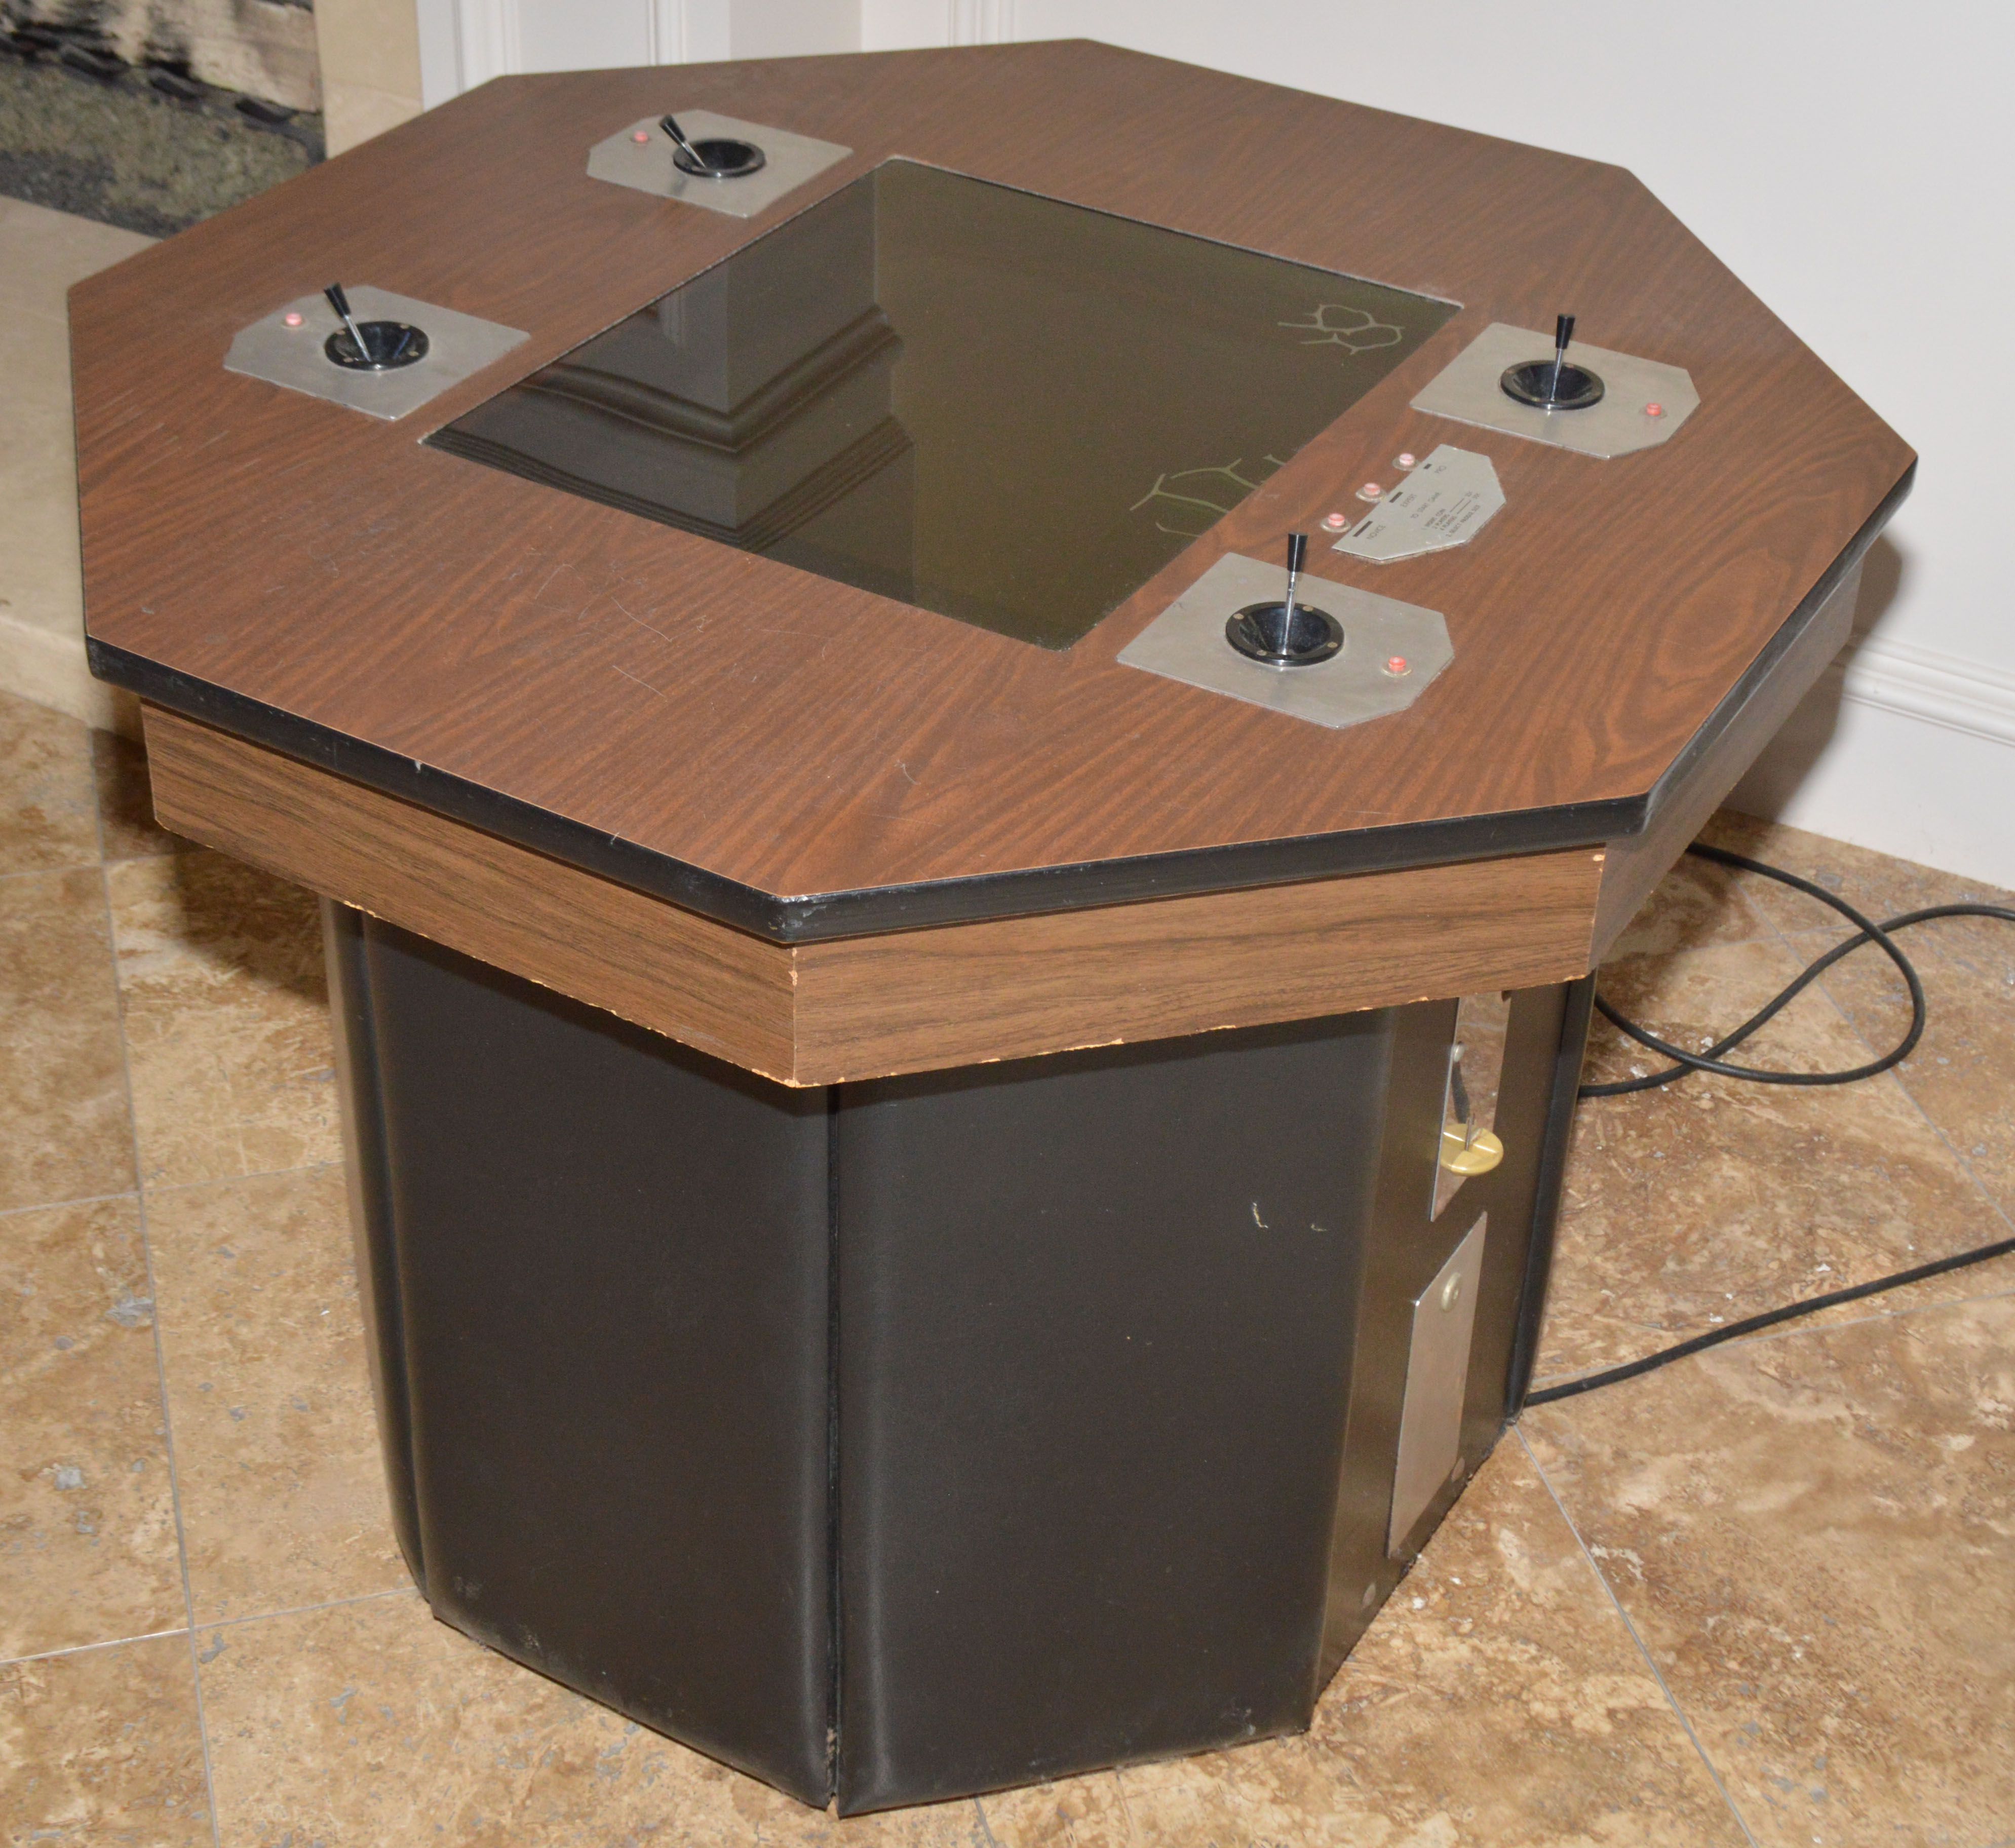 1974 Meadows Flim-Flam 4 Player Pong Coin Operated Arcade Video Game Machine Atari